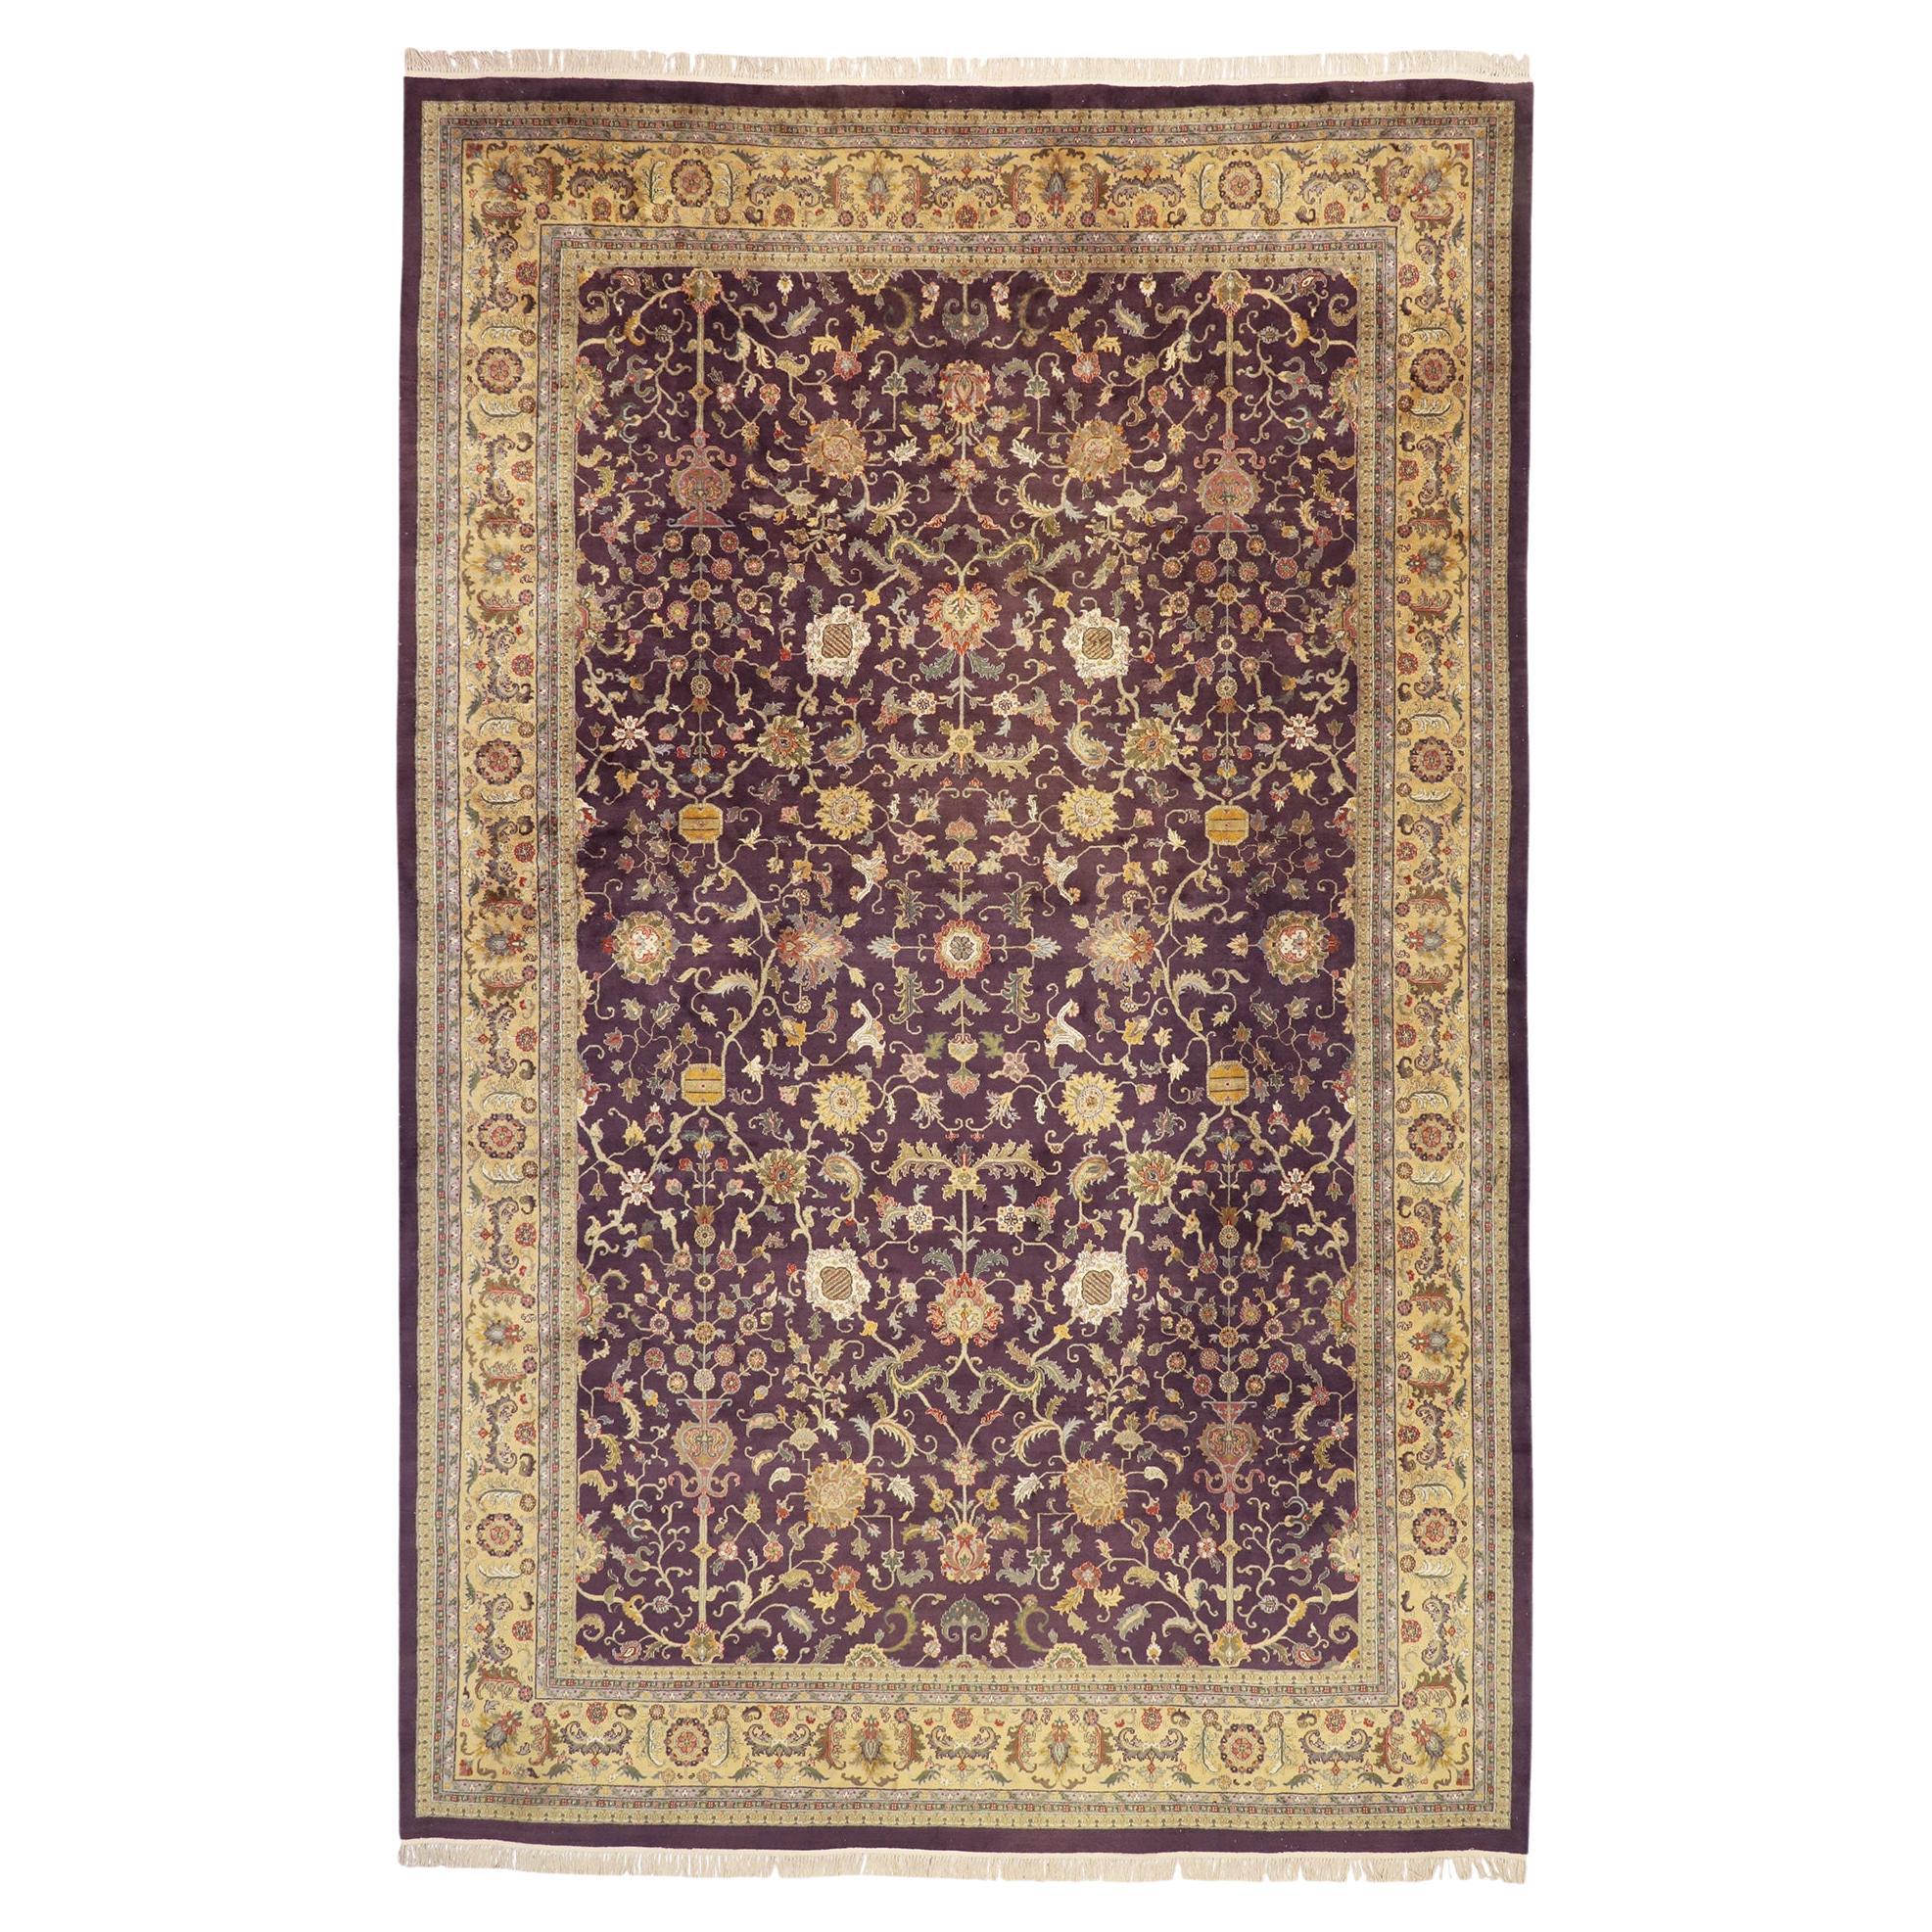 Vintage Aubergine Indian Palatial Carpet, 11'03 x 17'08 For Sale